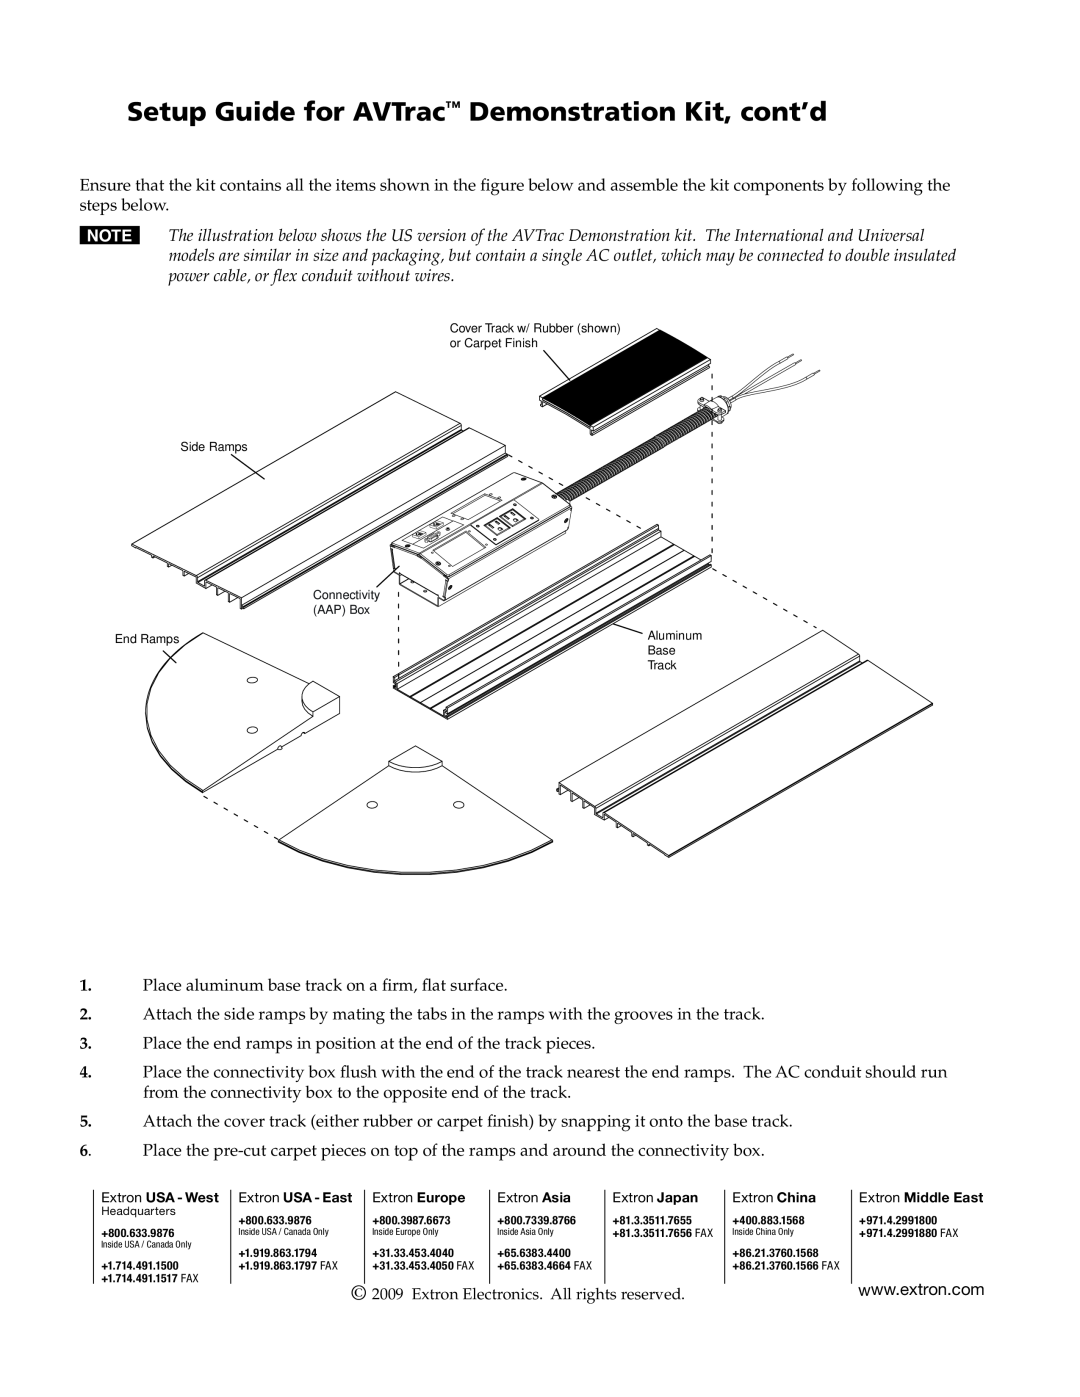 Extron electronic setup guide Preliminary, Setup Guide for AVTrac Demonstration Kit, cont’d 